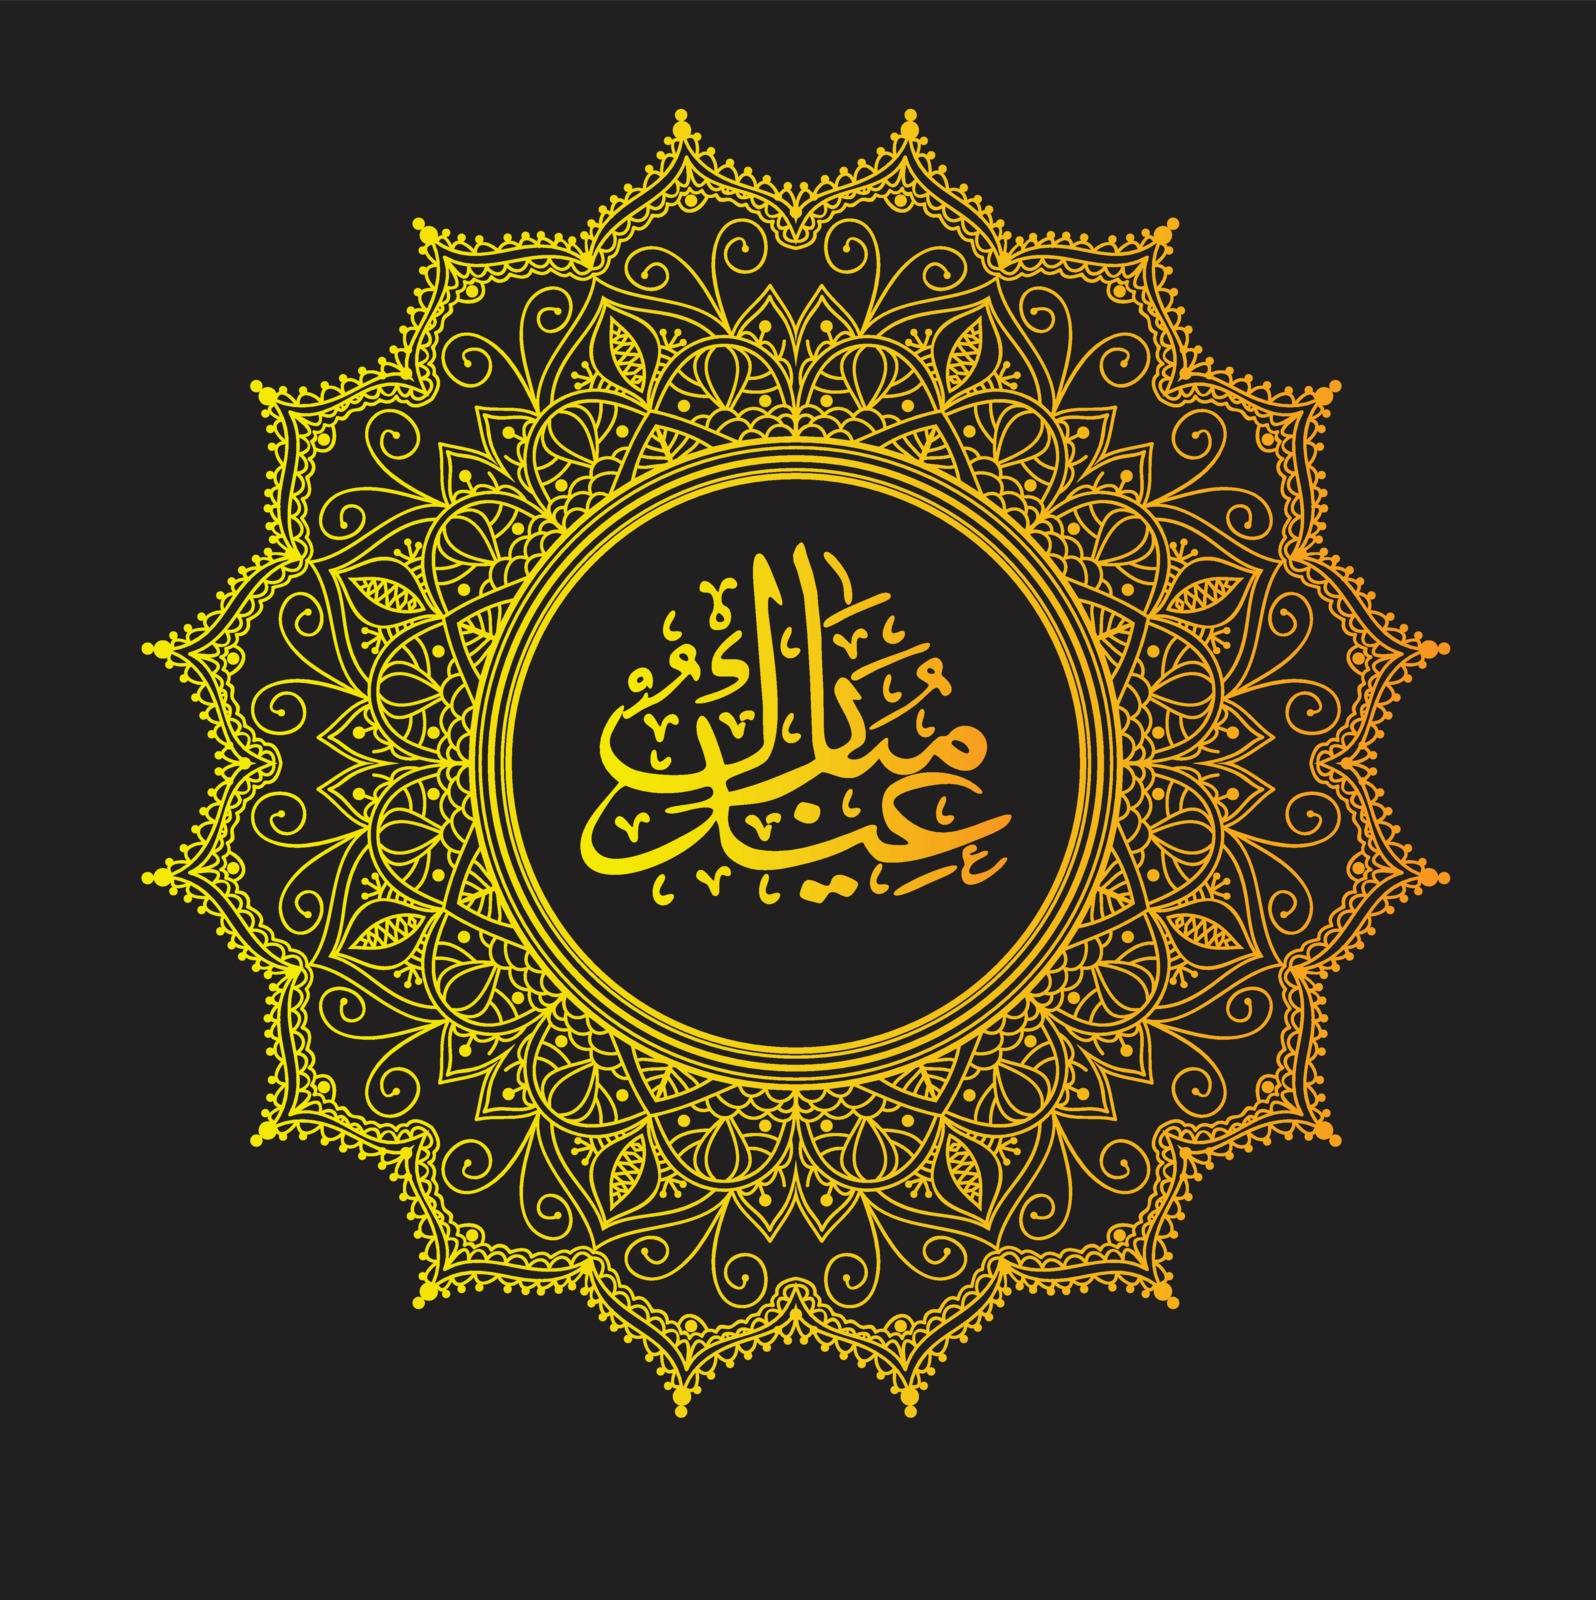 Eid Mubarak with arabic calligraphy on black background for Eid Celebrations greeting cards